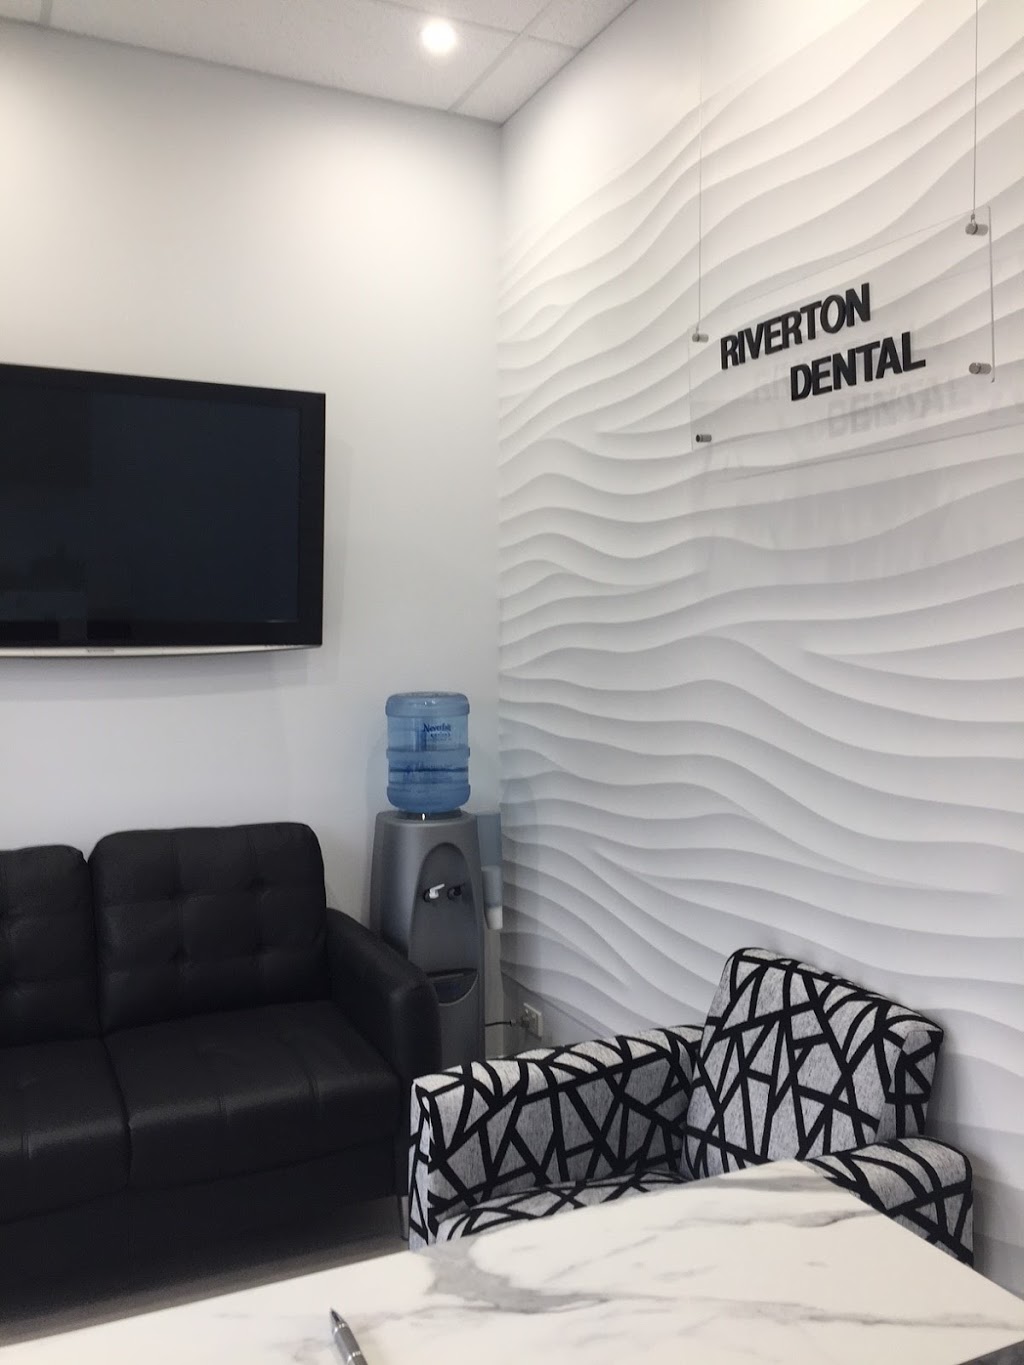 Riverton Dental Centre | Shelley Hub Unit 17 / 15 Tribute Street West, Shelley WA 6148, Australia | Phone: (08) 9354 4714